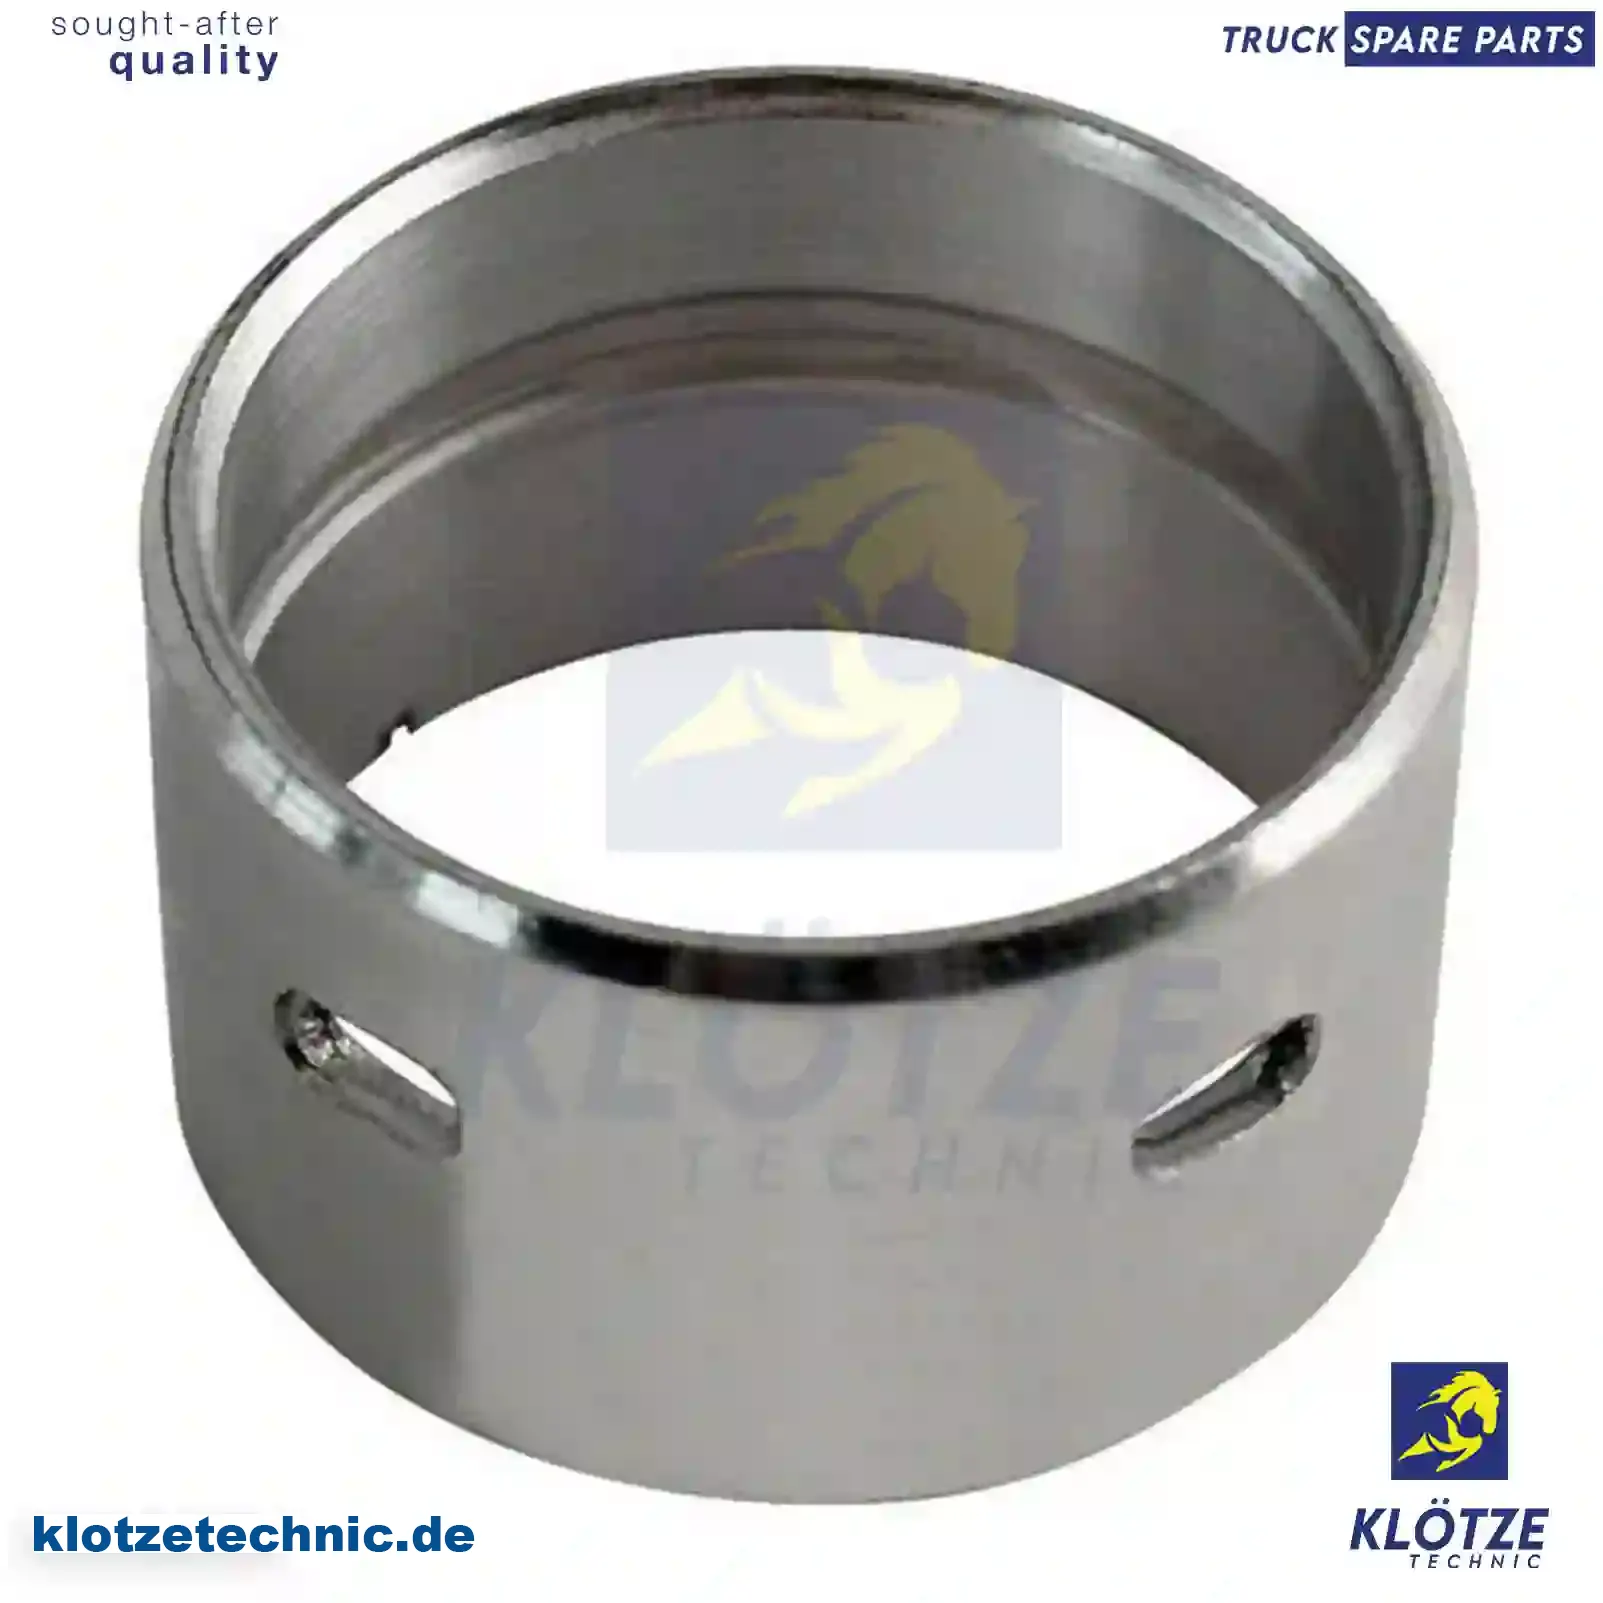 Crankshaft bearing, compressor, 51930201007, 0001314250, 4031310450, ZG50377-0008 || Klötze Technic